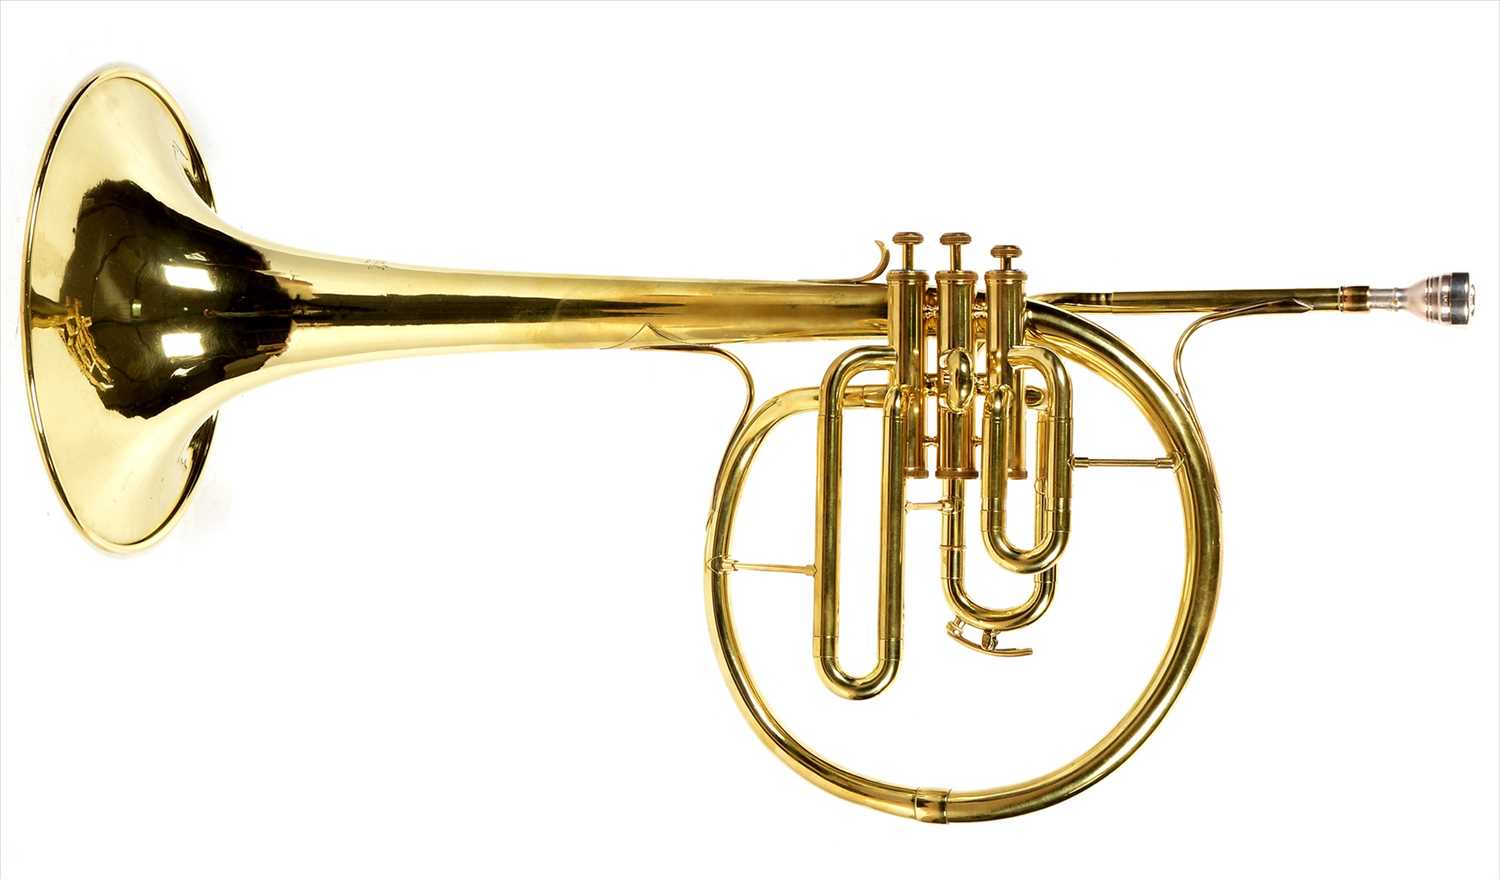 Lot 126 - Amati Brass Mellophone